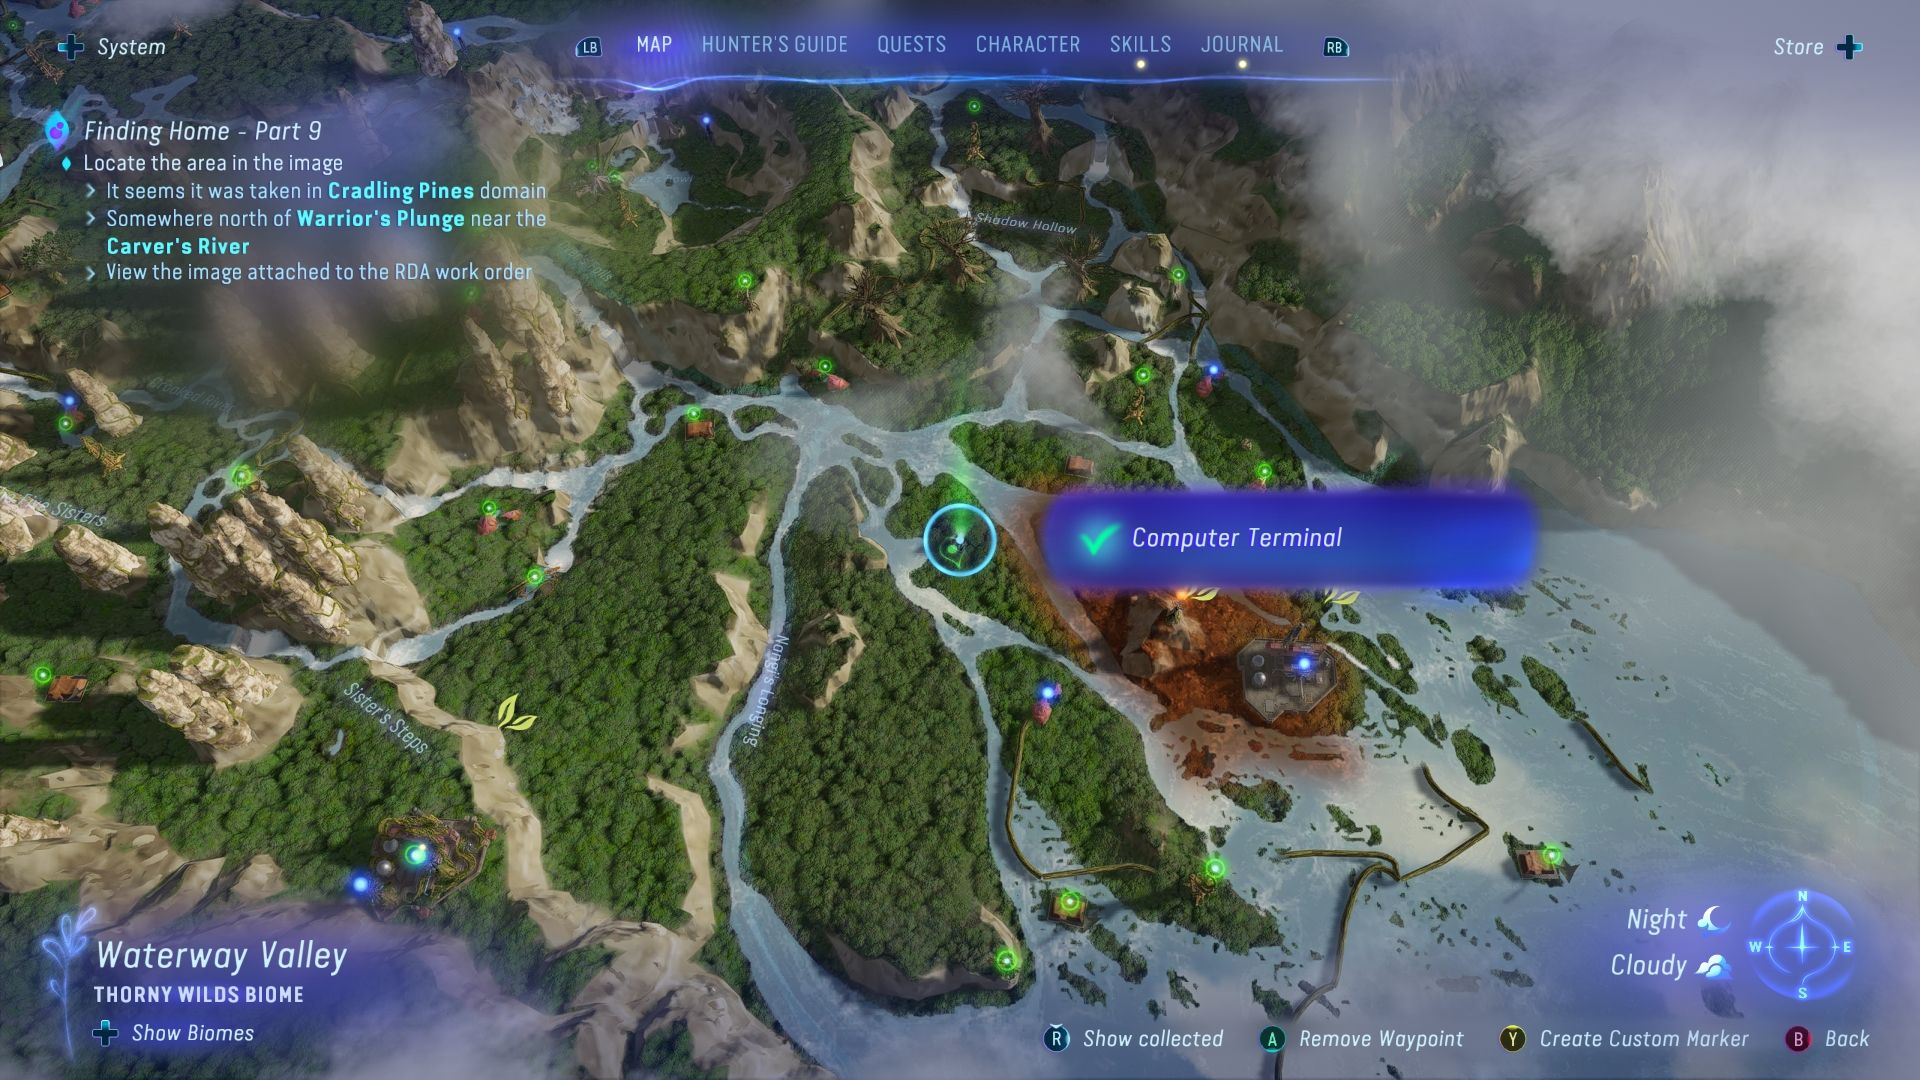 Computer Terminal Location in Waterway Valley Avatar Frontiers Of Pandora